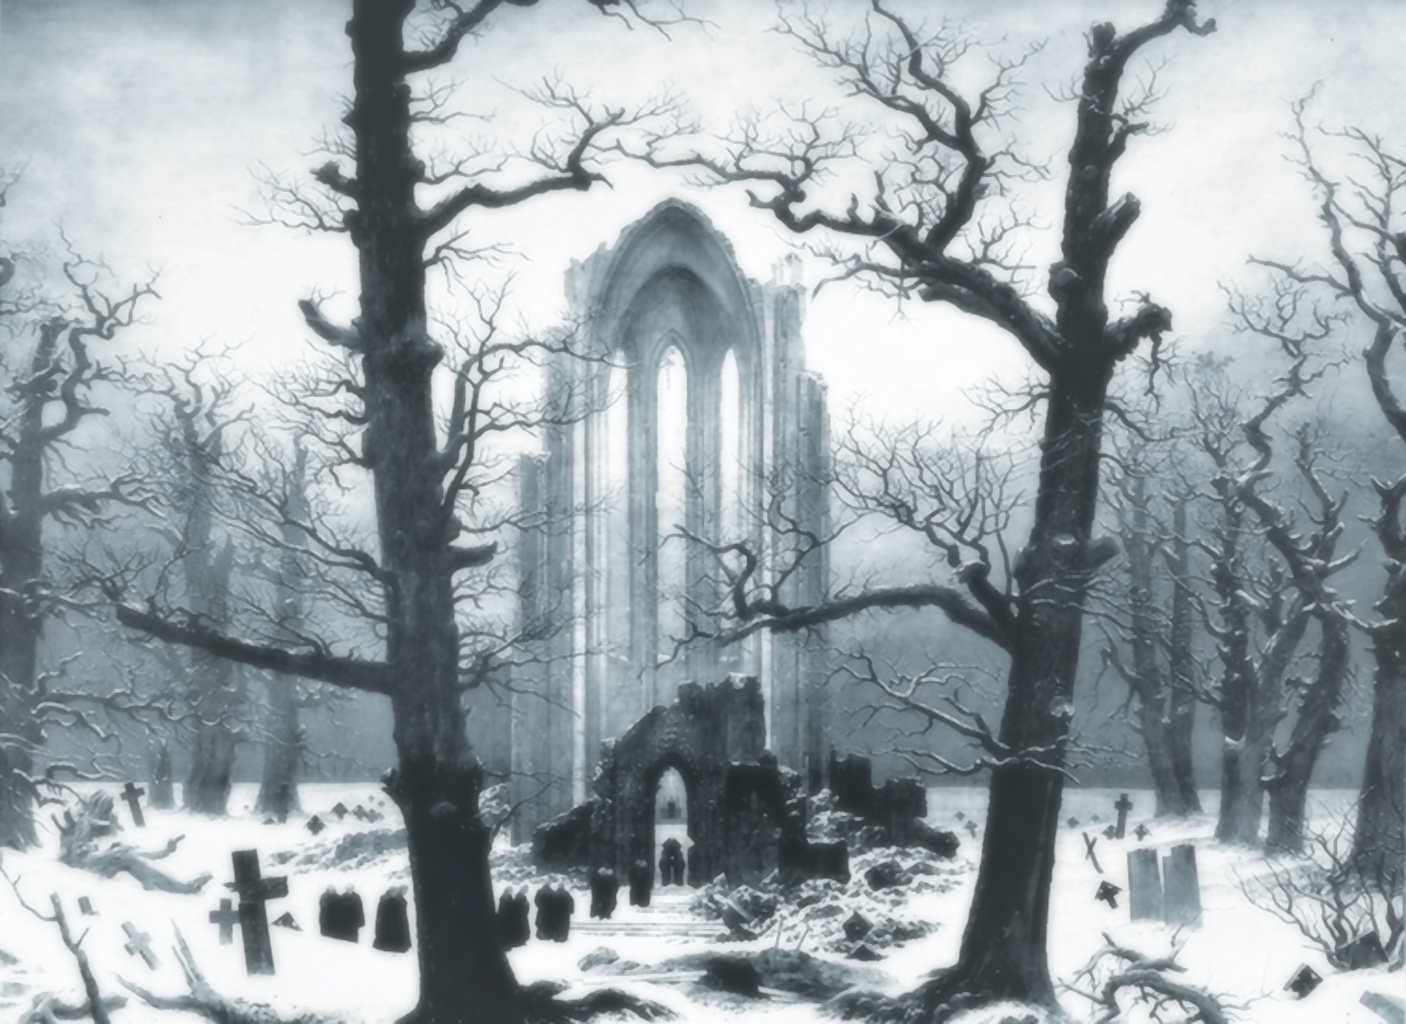 dark, fantasy, cemetery, winter, graveyard, ruin, snow, tree